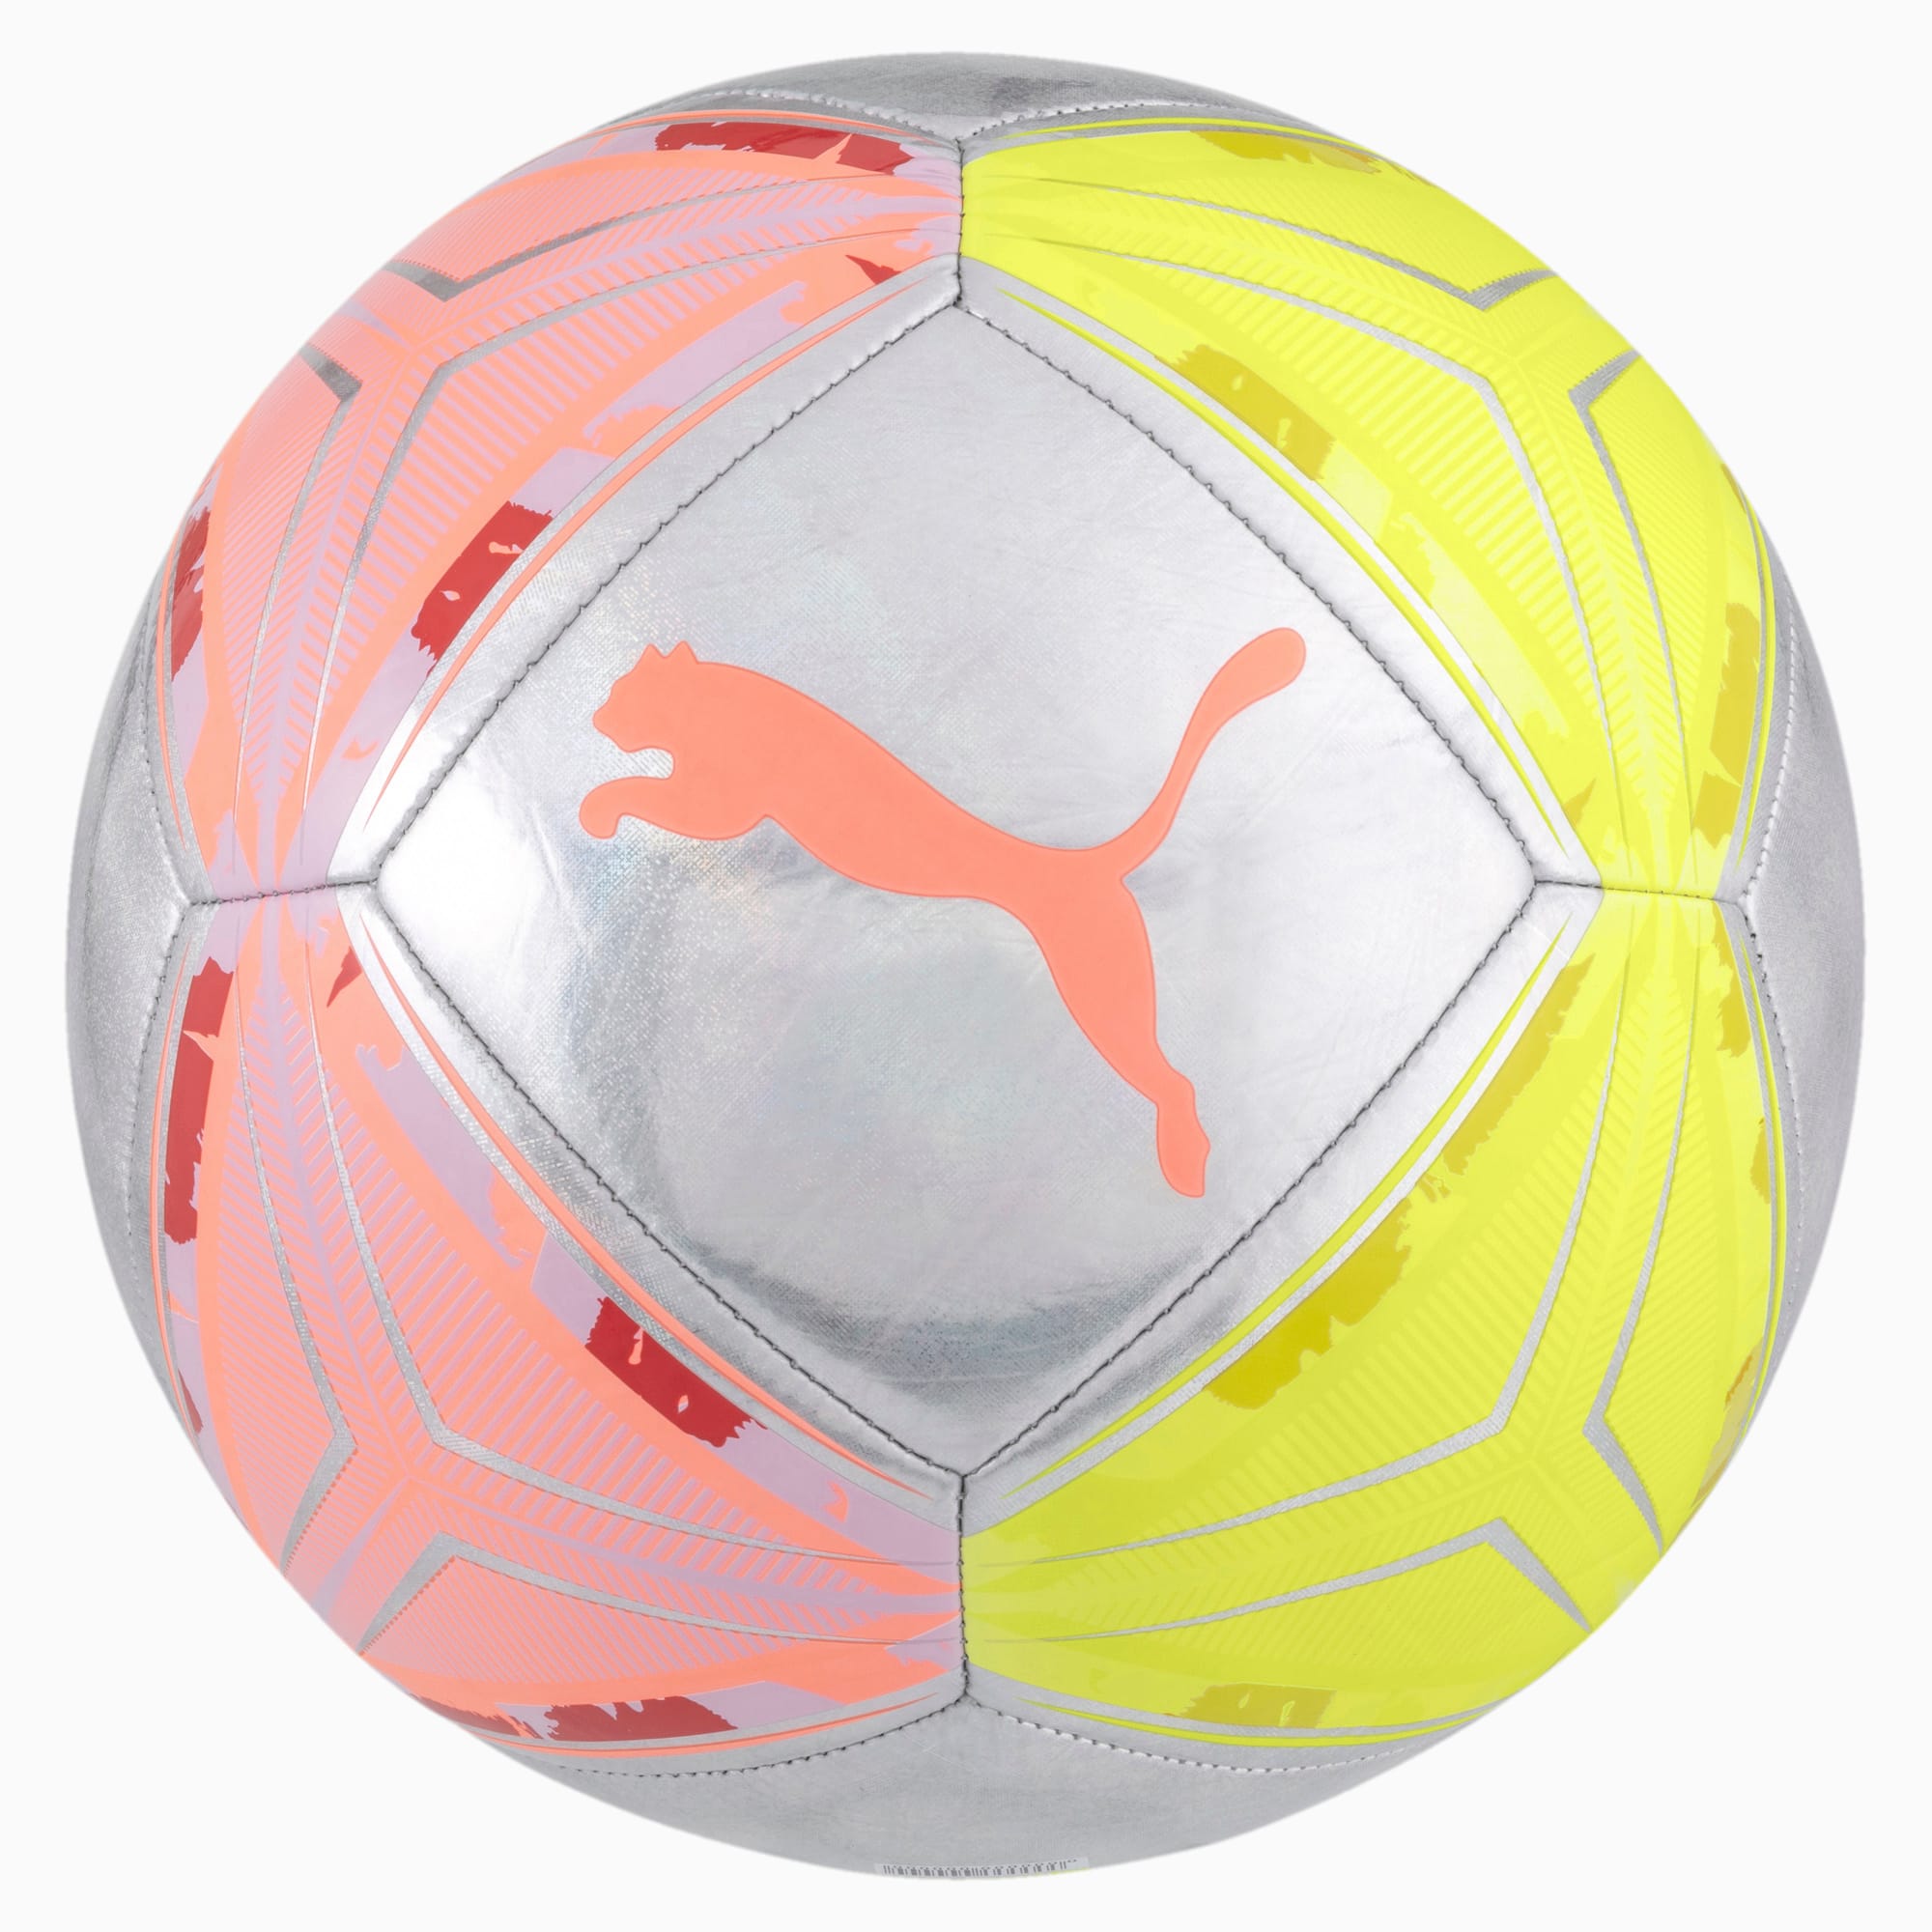 SPIN voetbal, Roze/Geel, Maat 4 | PUMA